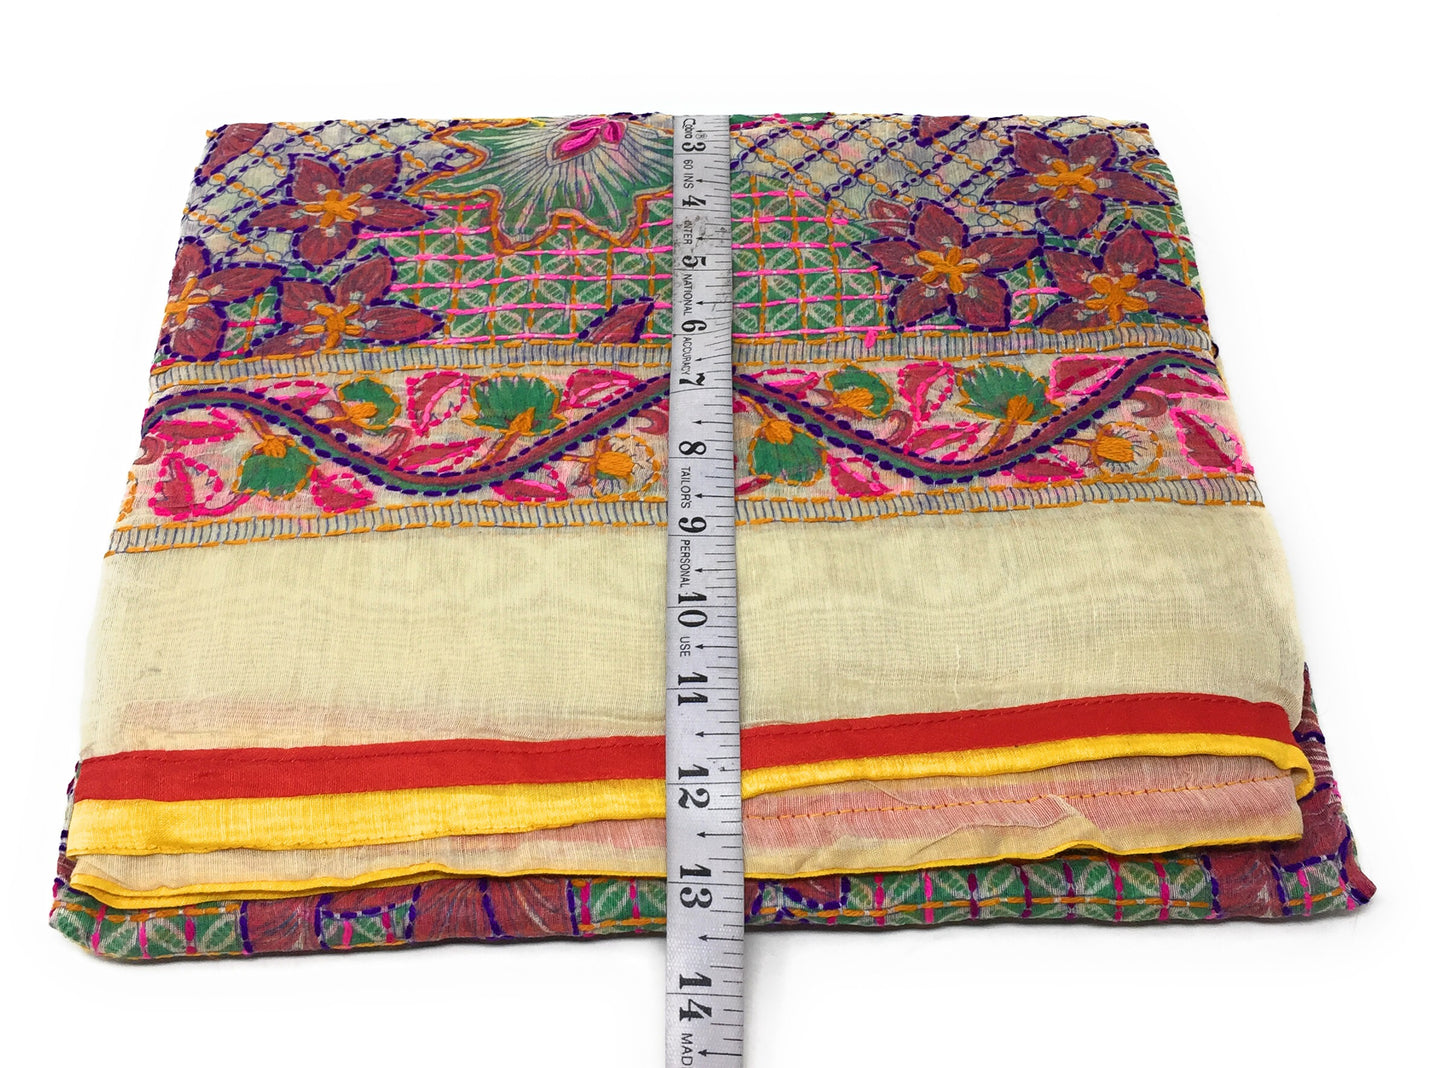 Handmade Dupatta - Kantha Embroidery on Madhubani Motif